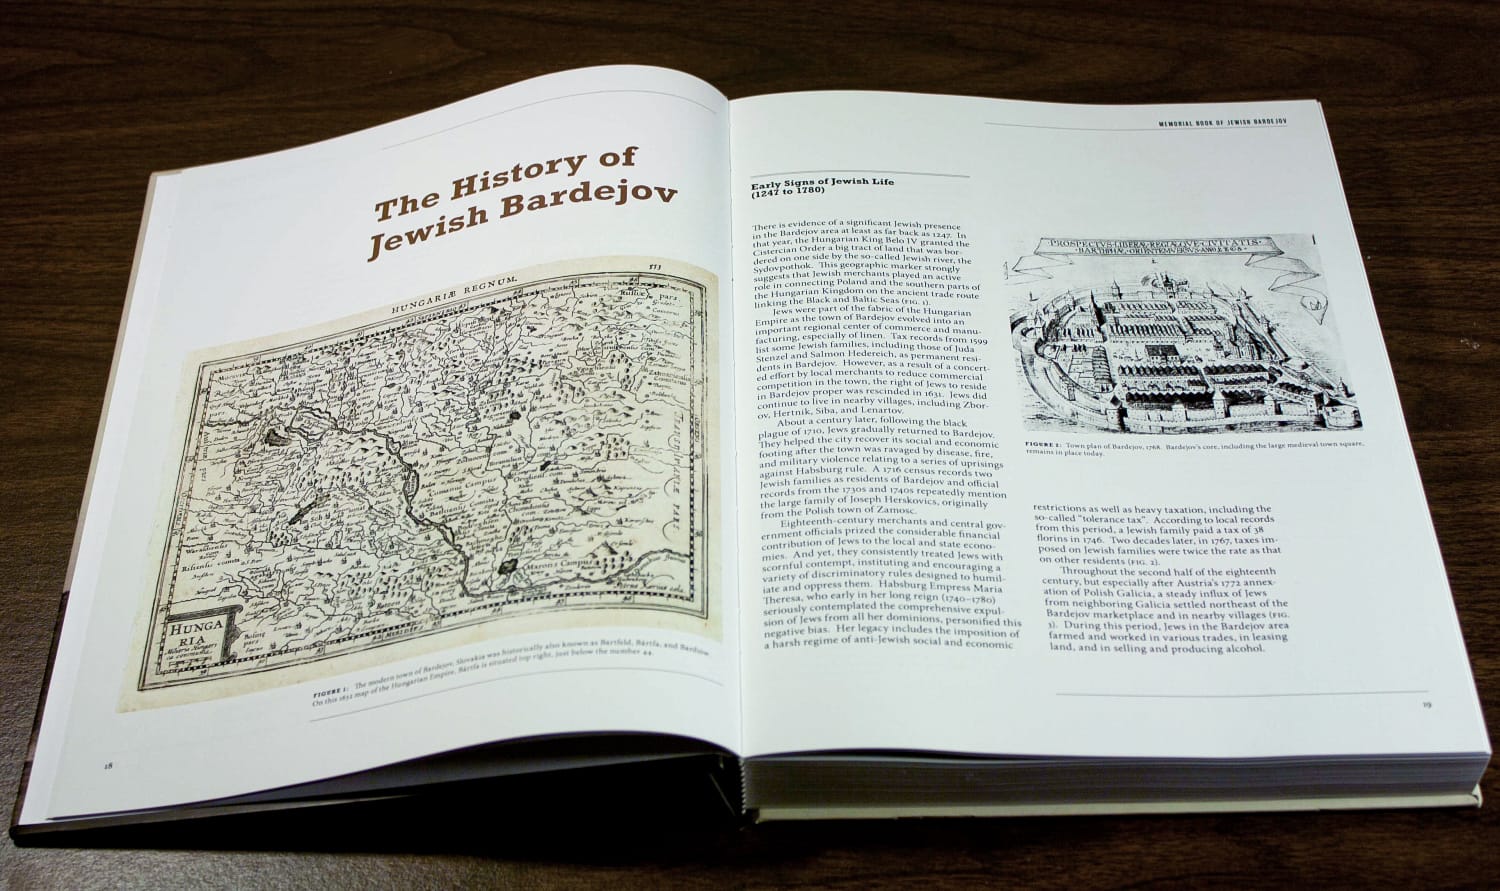 Chapter 1: The History of Jewish Bardejov